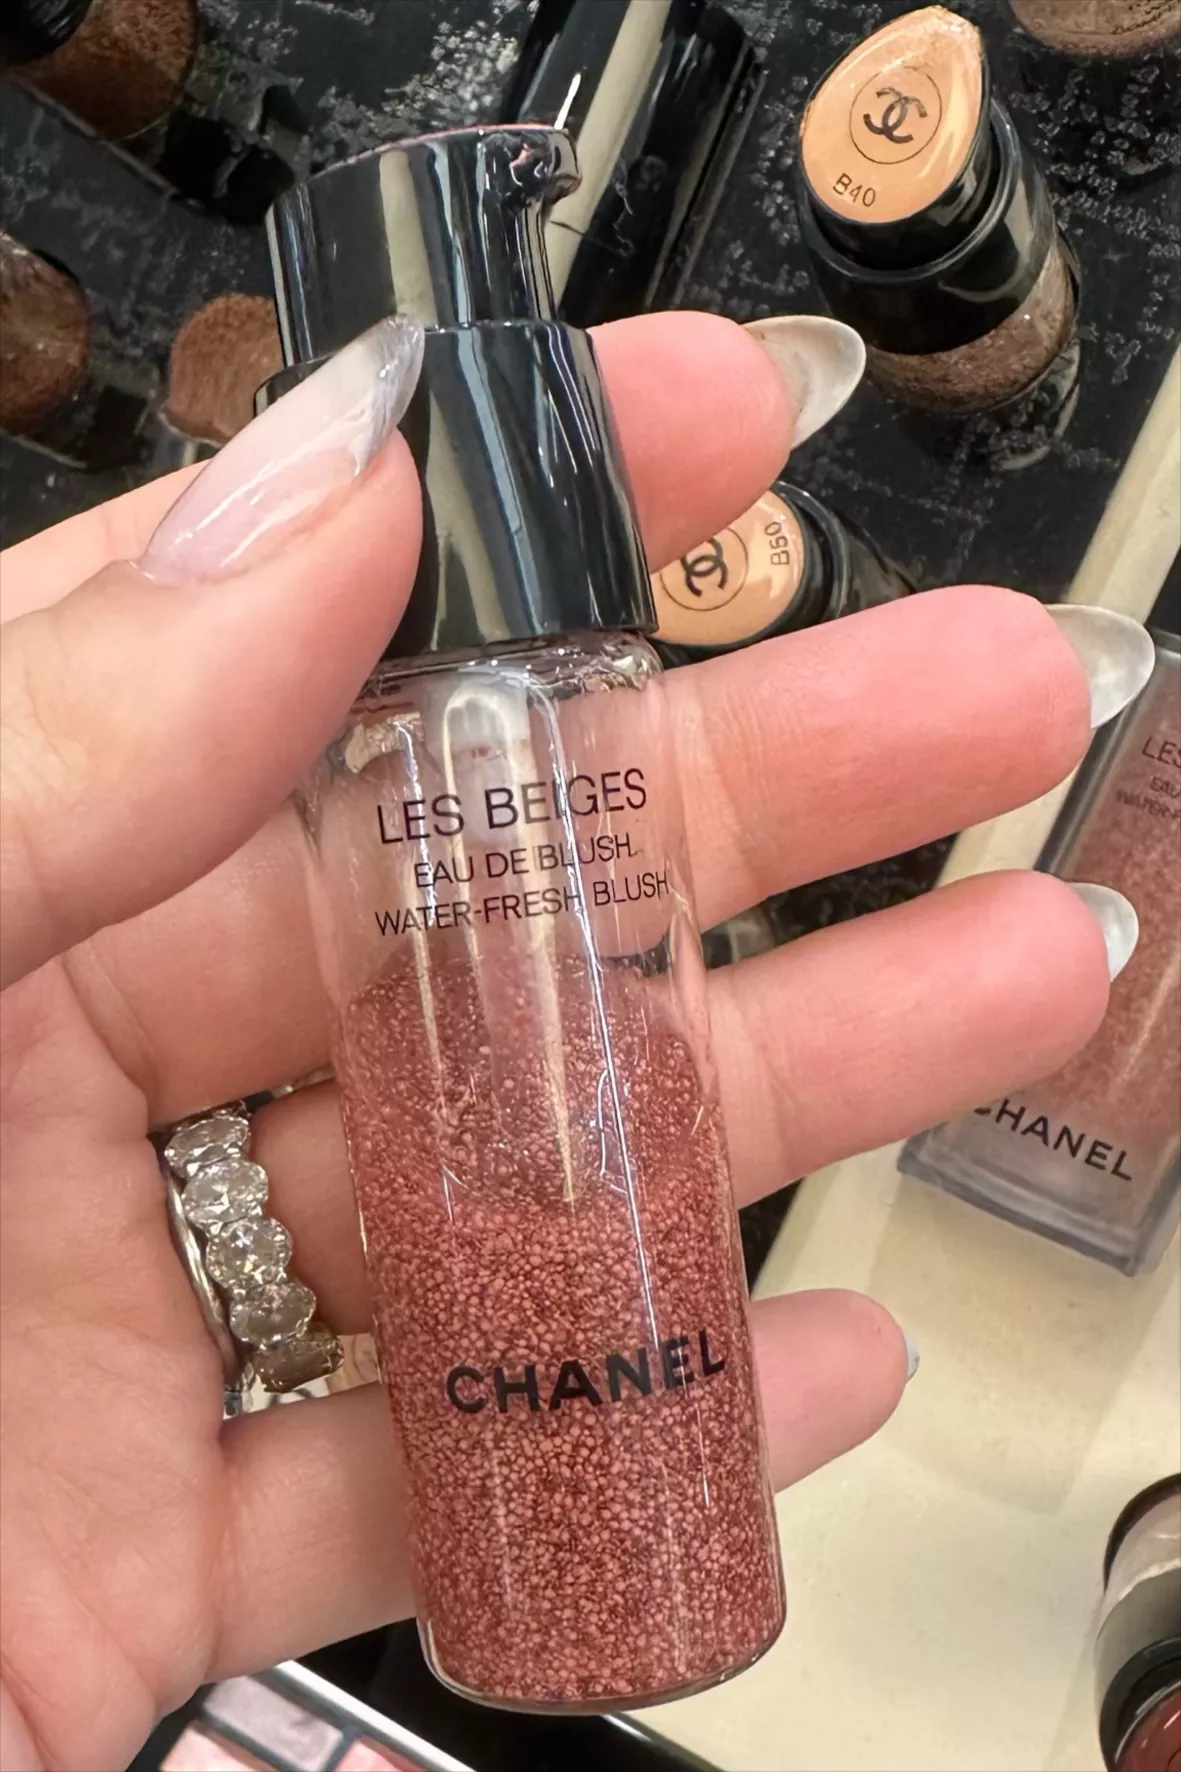 Chanel Water-Fresh Blush Swatches (x5)